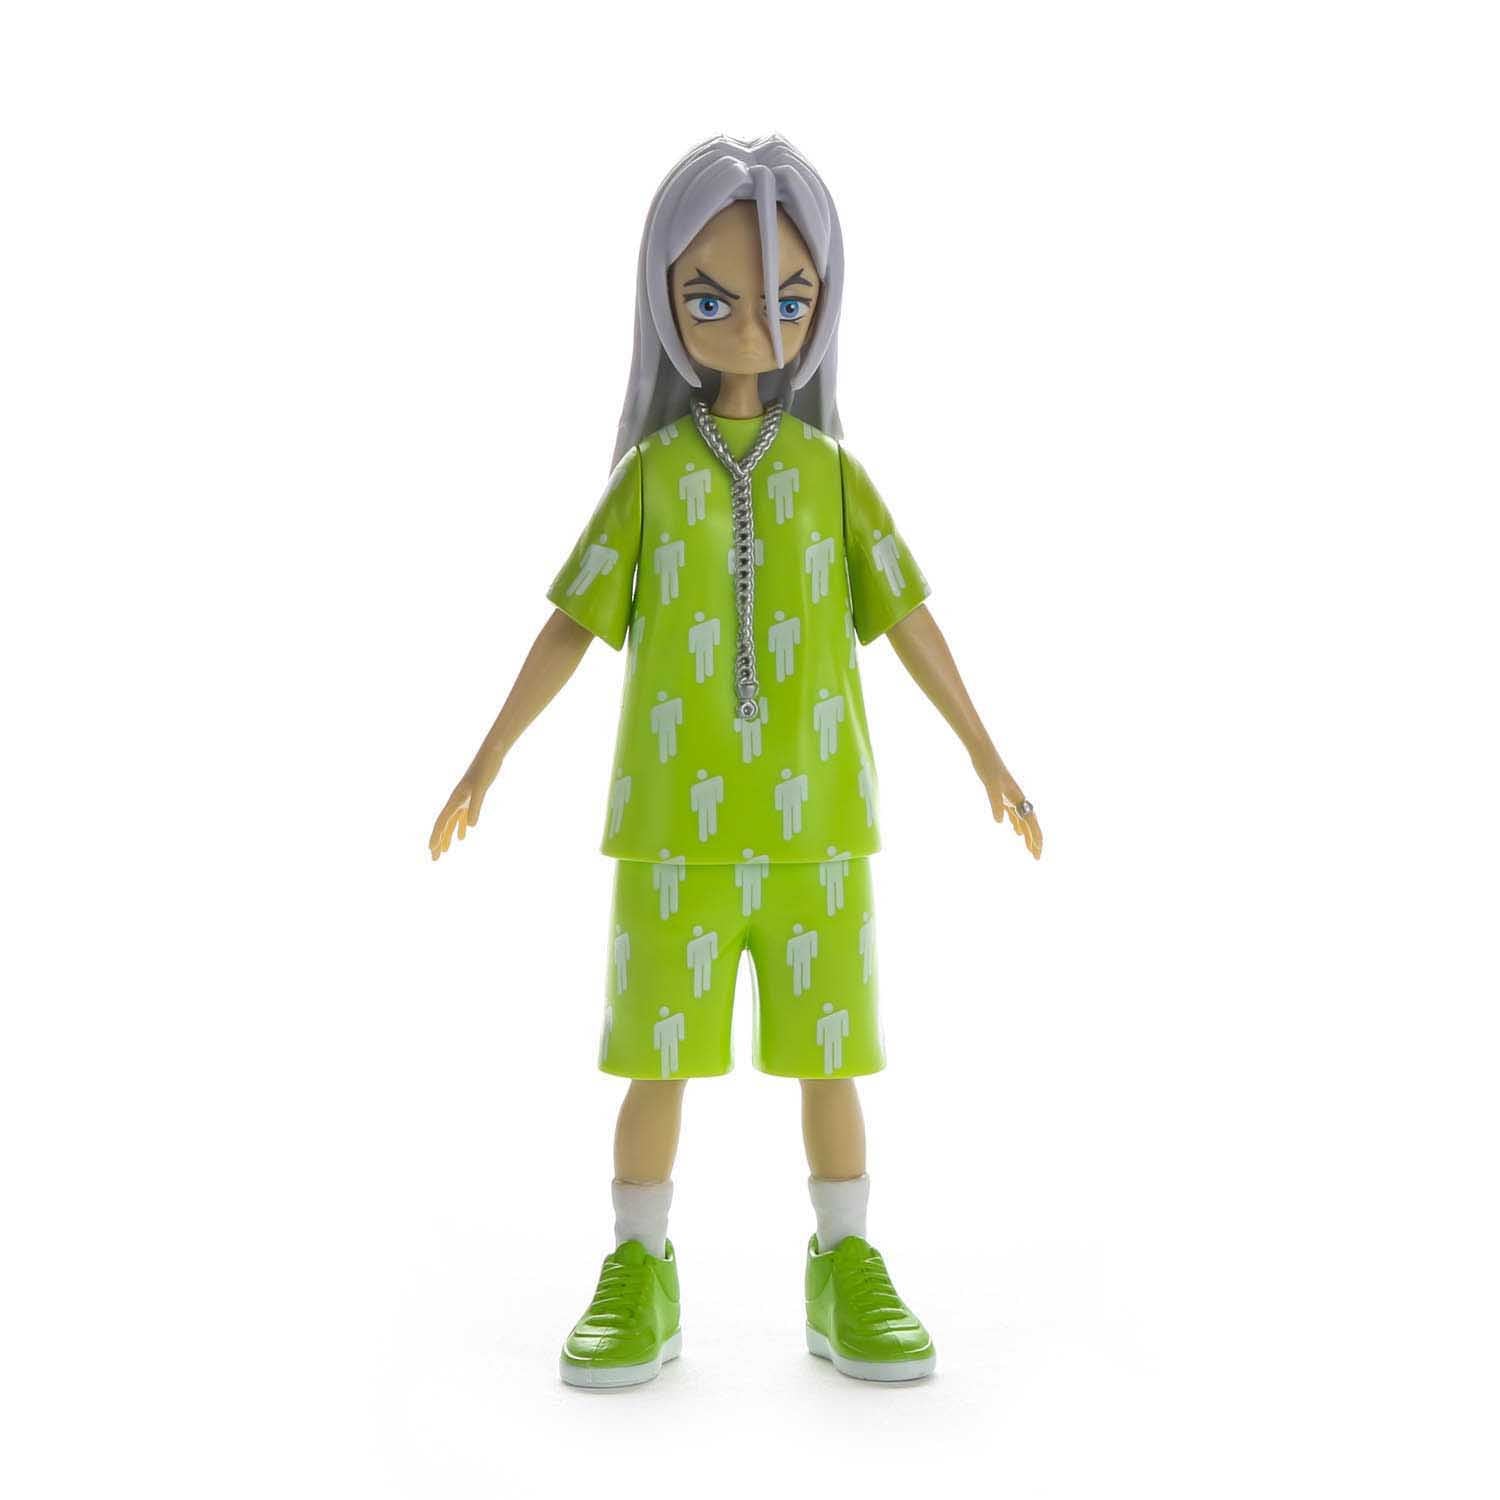 BILLIE EILISH Takashi Murakami X Limited Edition Vinyl Toy Figure Doll NIB